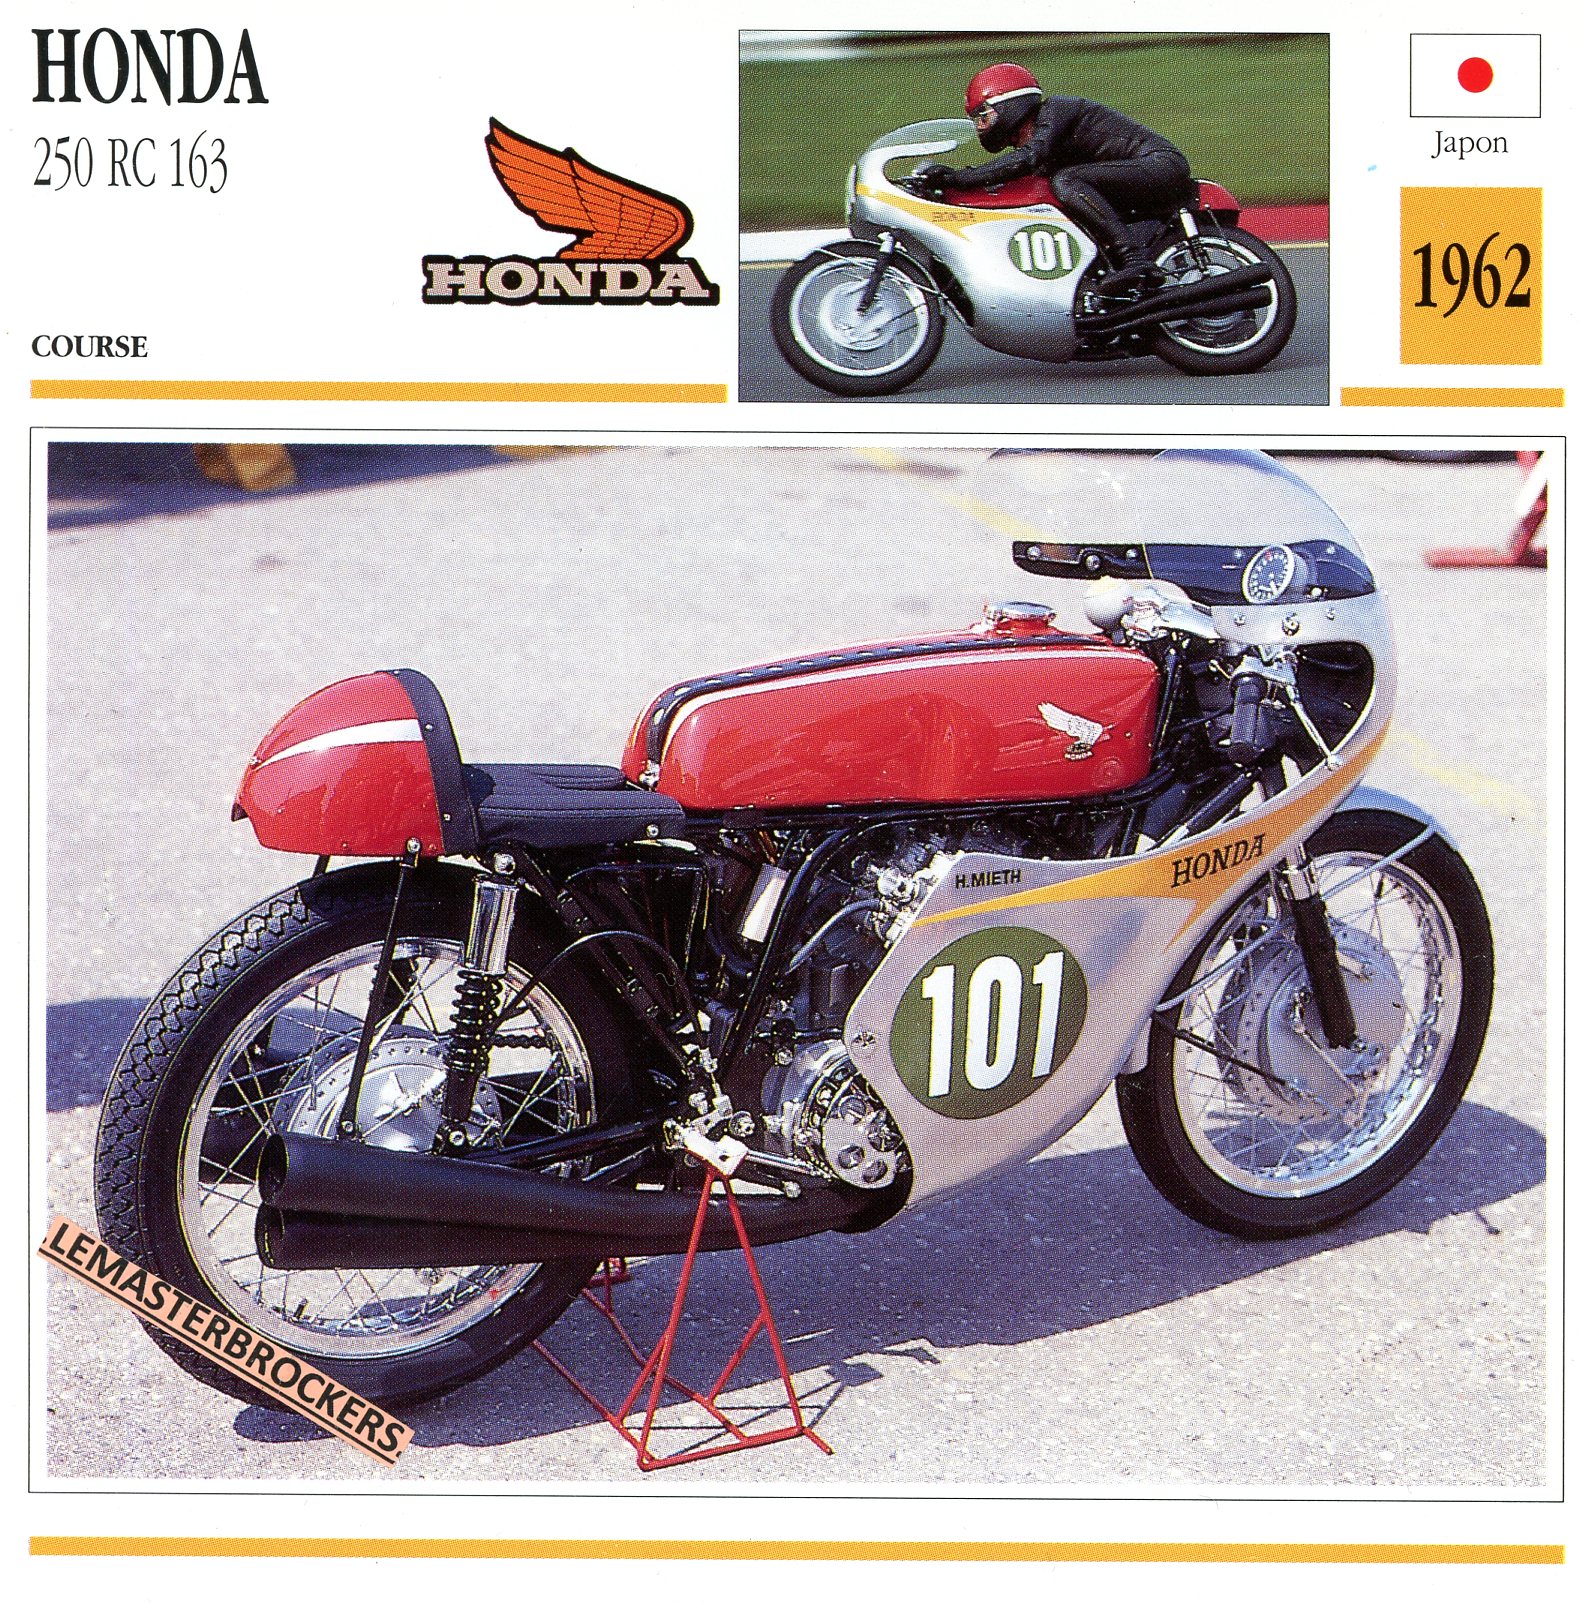 FICHE-MOTO-HONDA-250-CR163-1962-LEMASTERBROCKERS-CARS-MOTORCYCLE